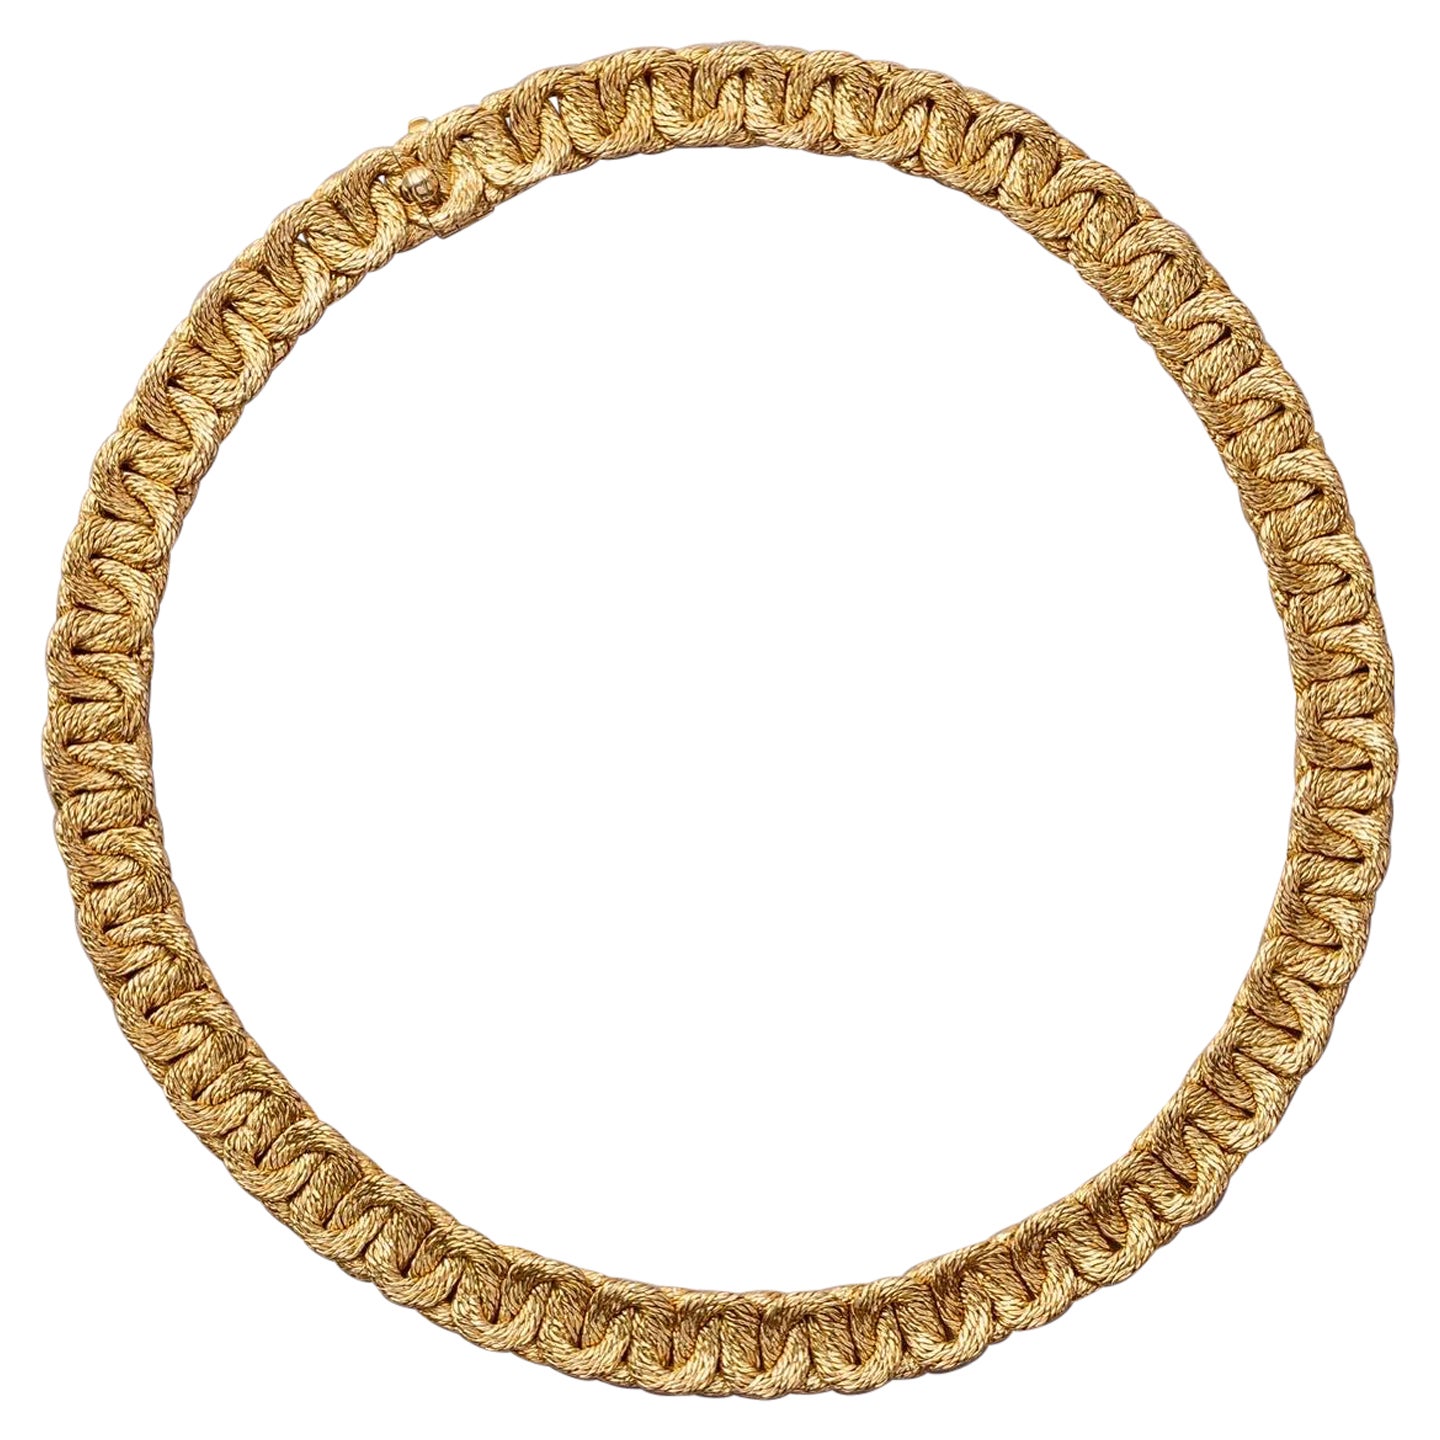 18 Carat Gold Georges Lenfant Woven Link Necklace